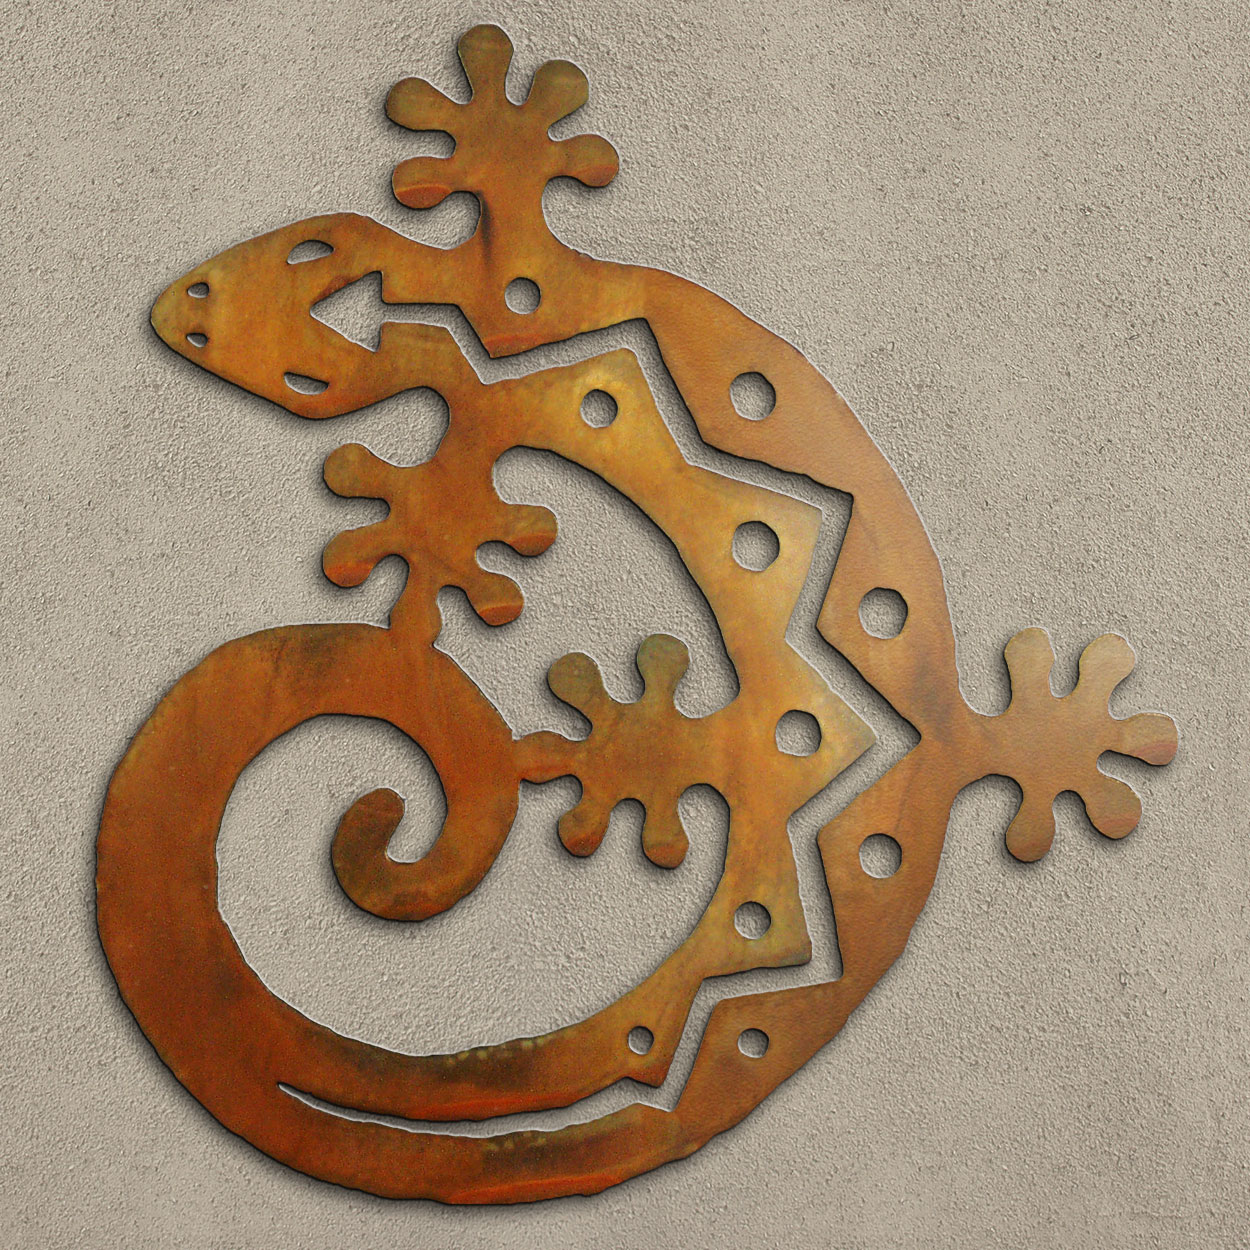 24in Large C-Shaped Lizard 3D Metal Wall Art in Rust Finish - Southwest Decor